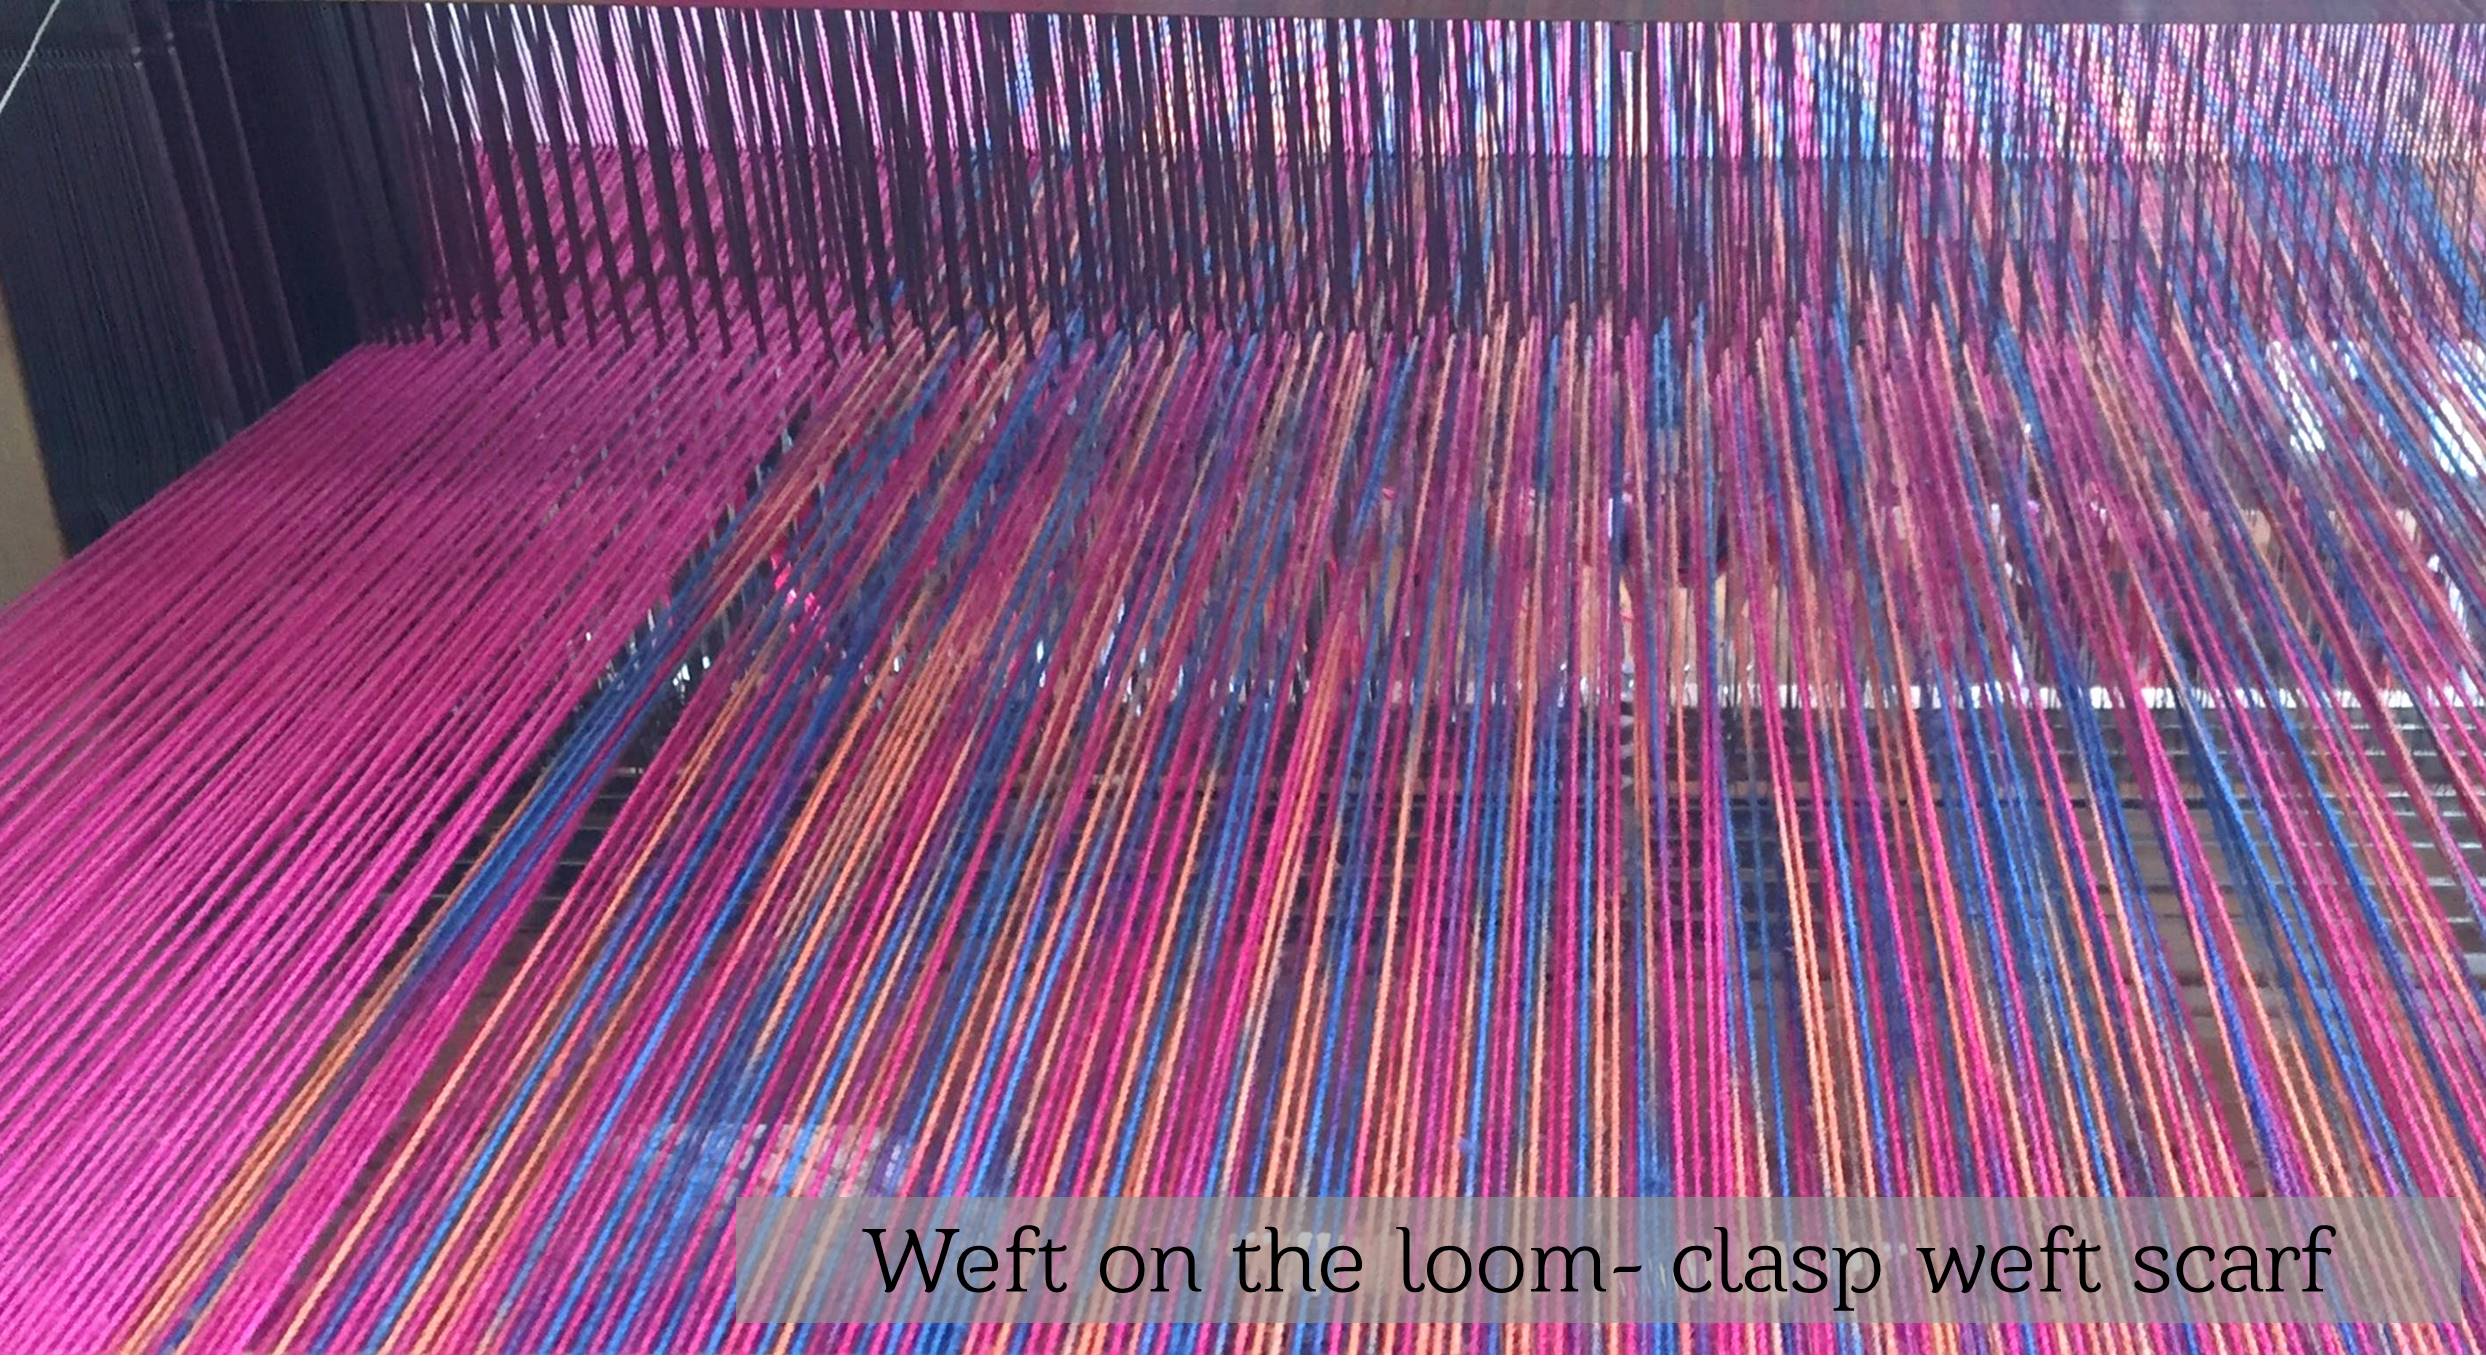 Warp on the loom